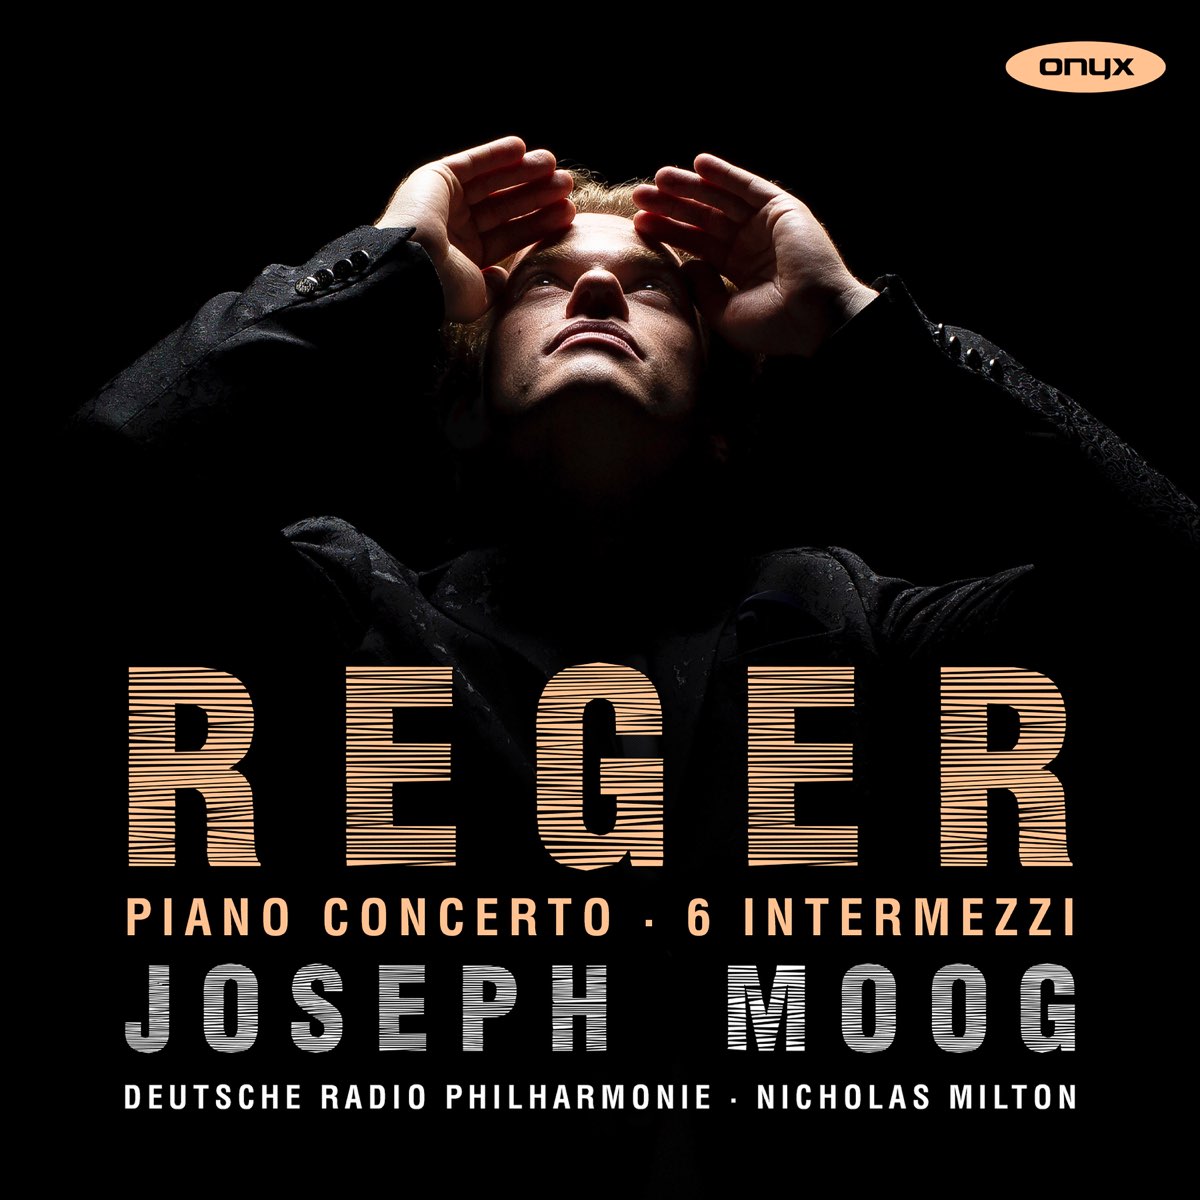 Reger: Piano Concerto, 6 Intermezzi - Album by Joseph Moog, Deutsche Radio  Philharmonie Saarbrücken Kaiserslautern & Nicholas Milton - Apple Music